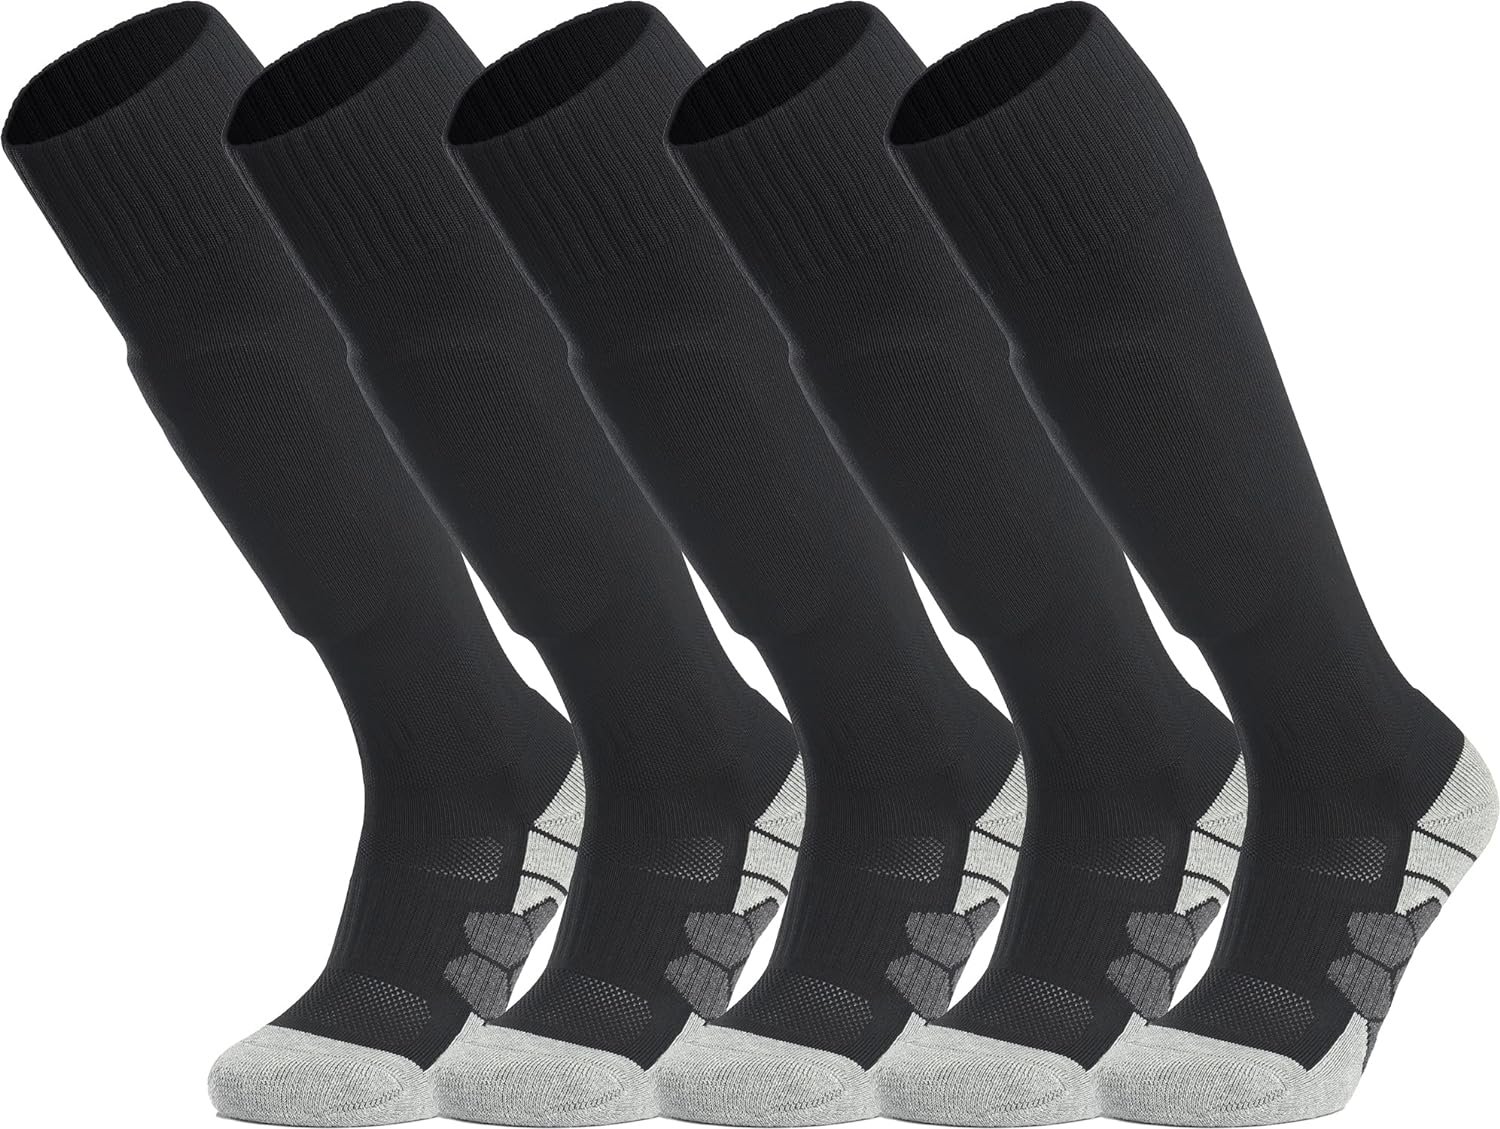 APTESOL Knee High Soccer Socks Review